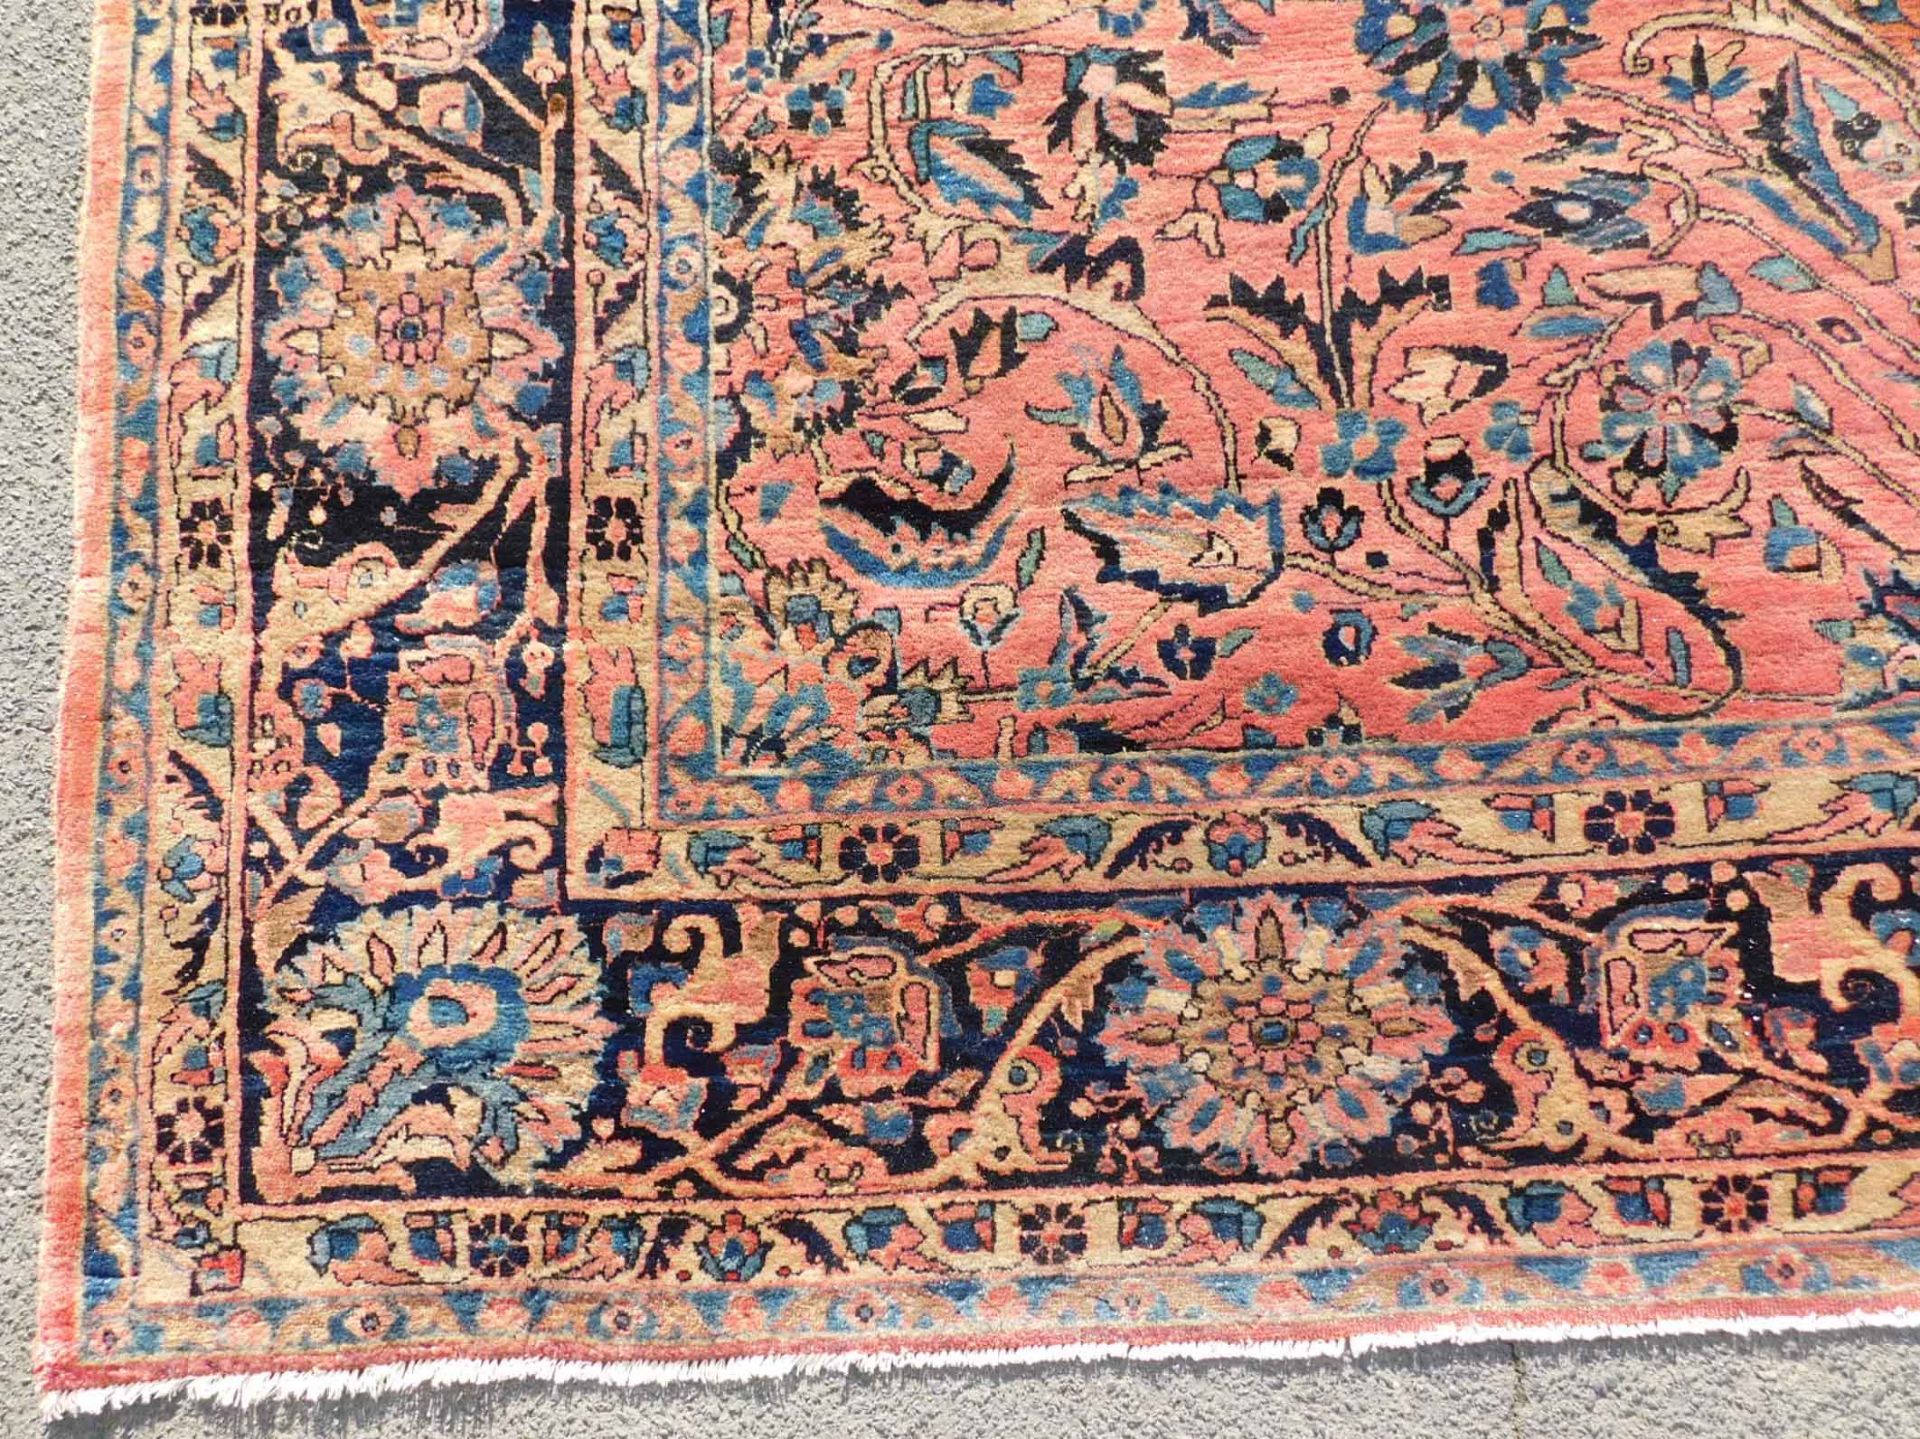 Saruk Persian carpet. "American Saruk". Iran. About 100 years old. - Image 3 of 20